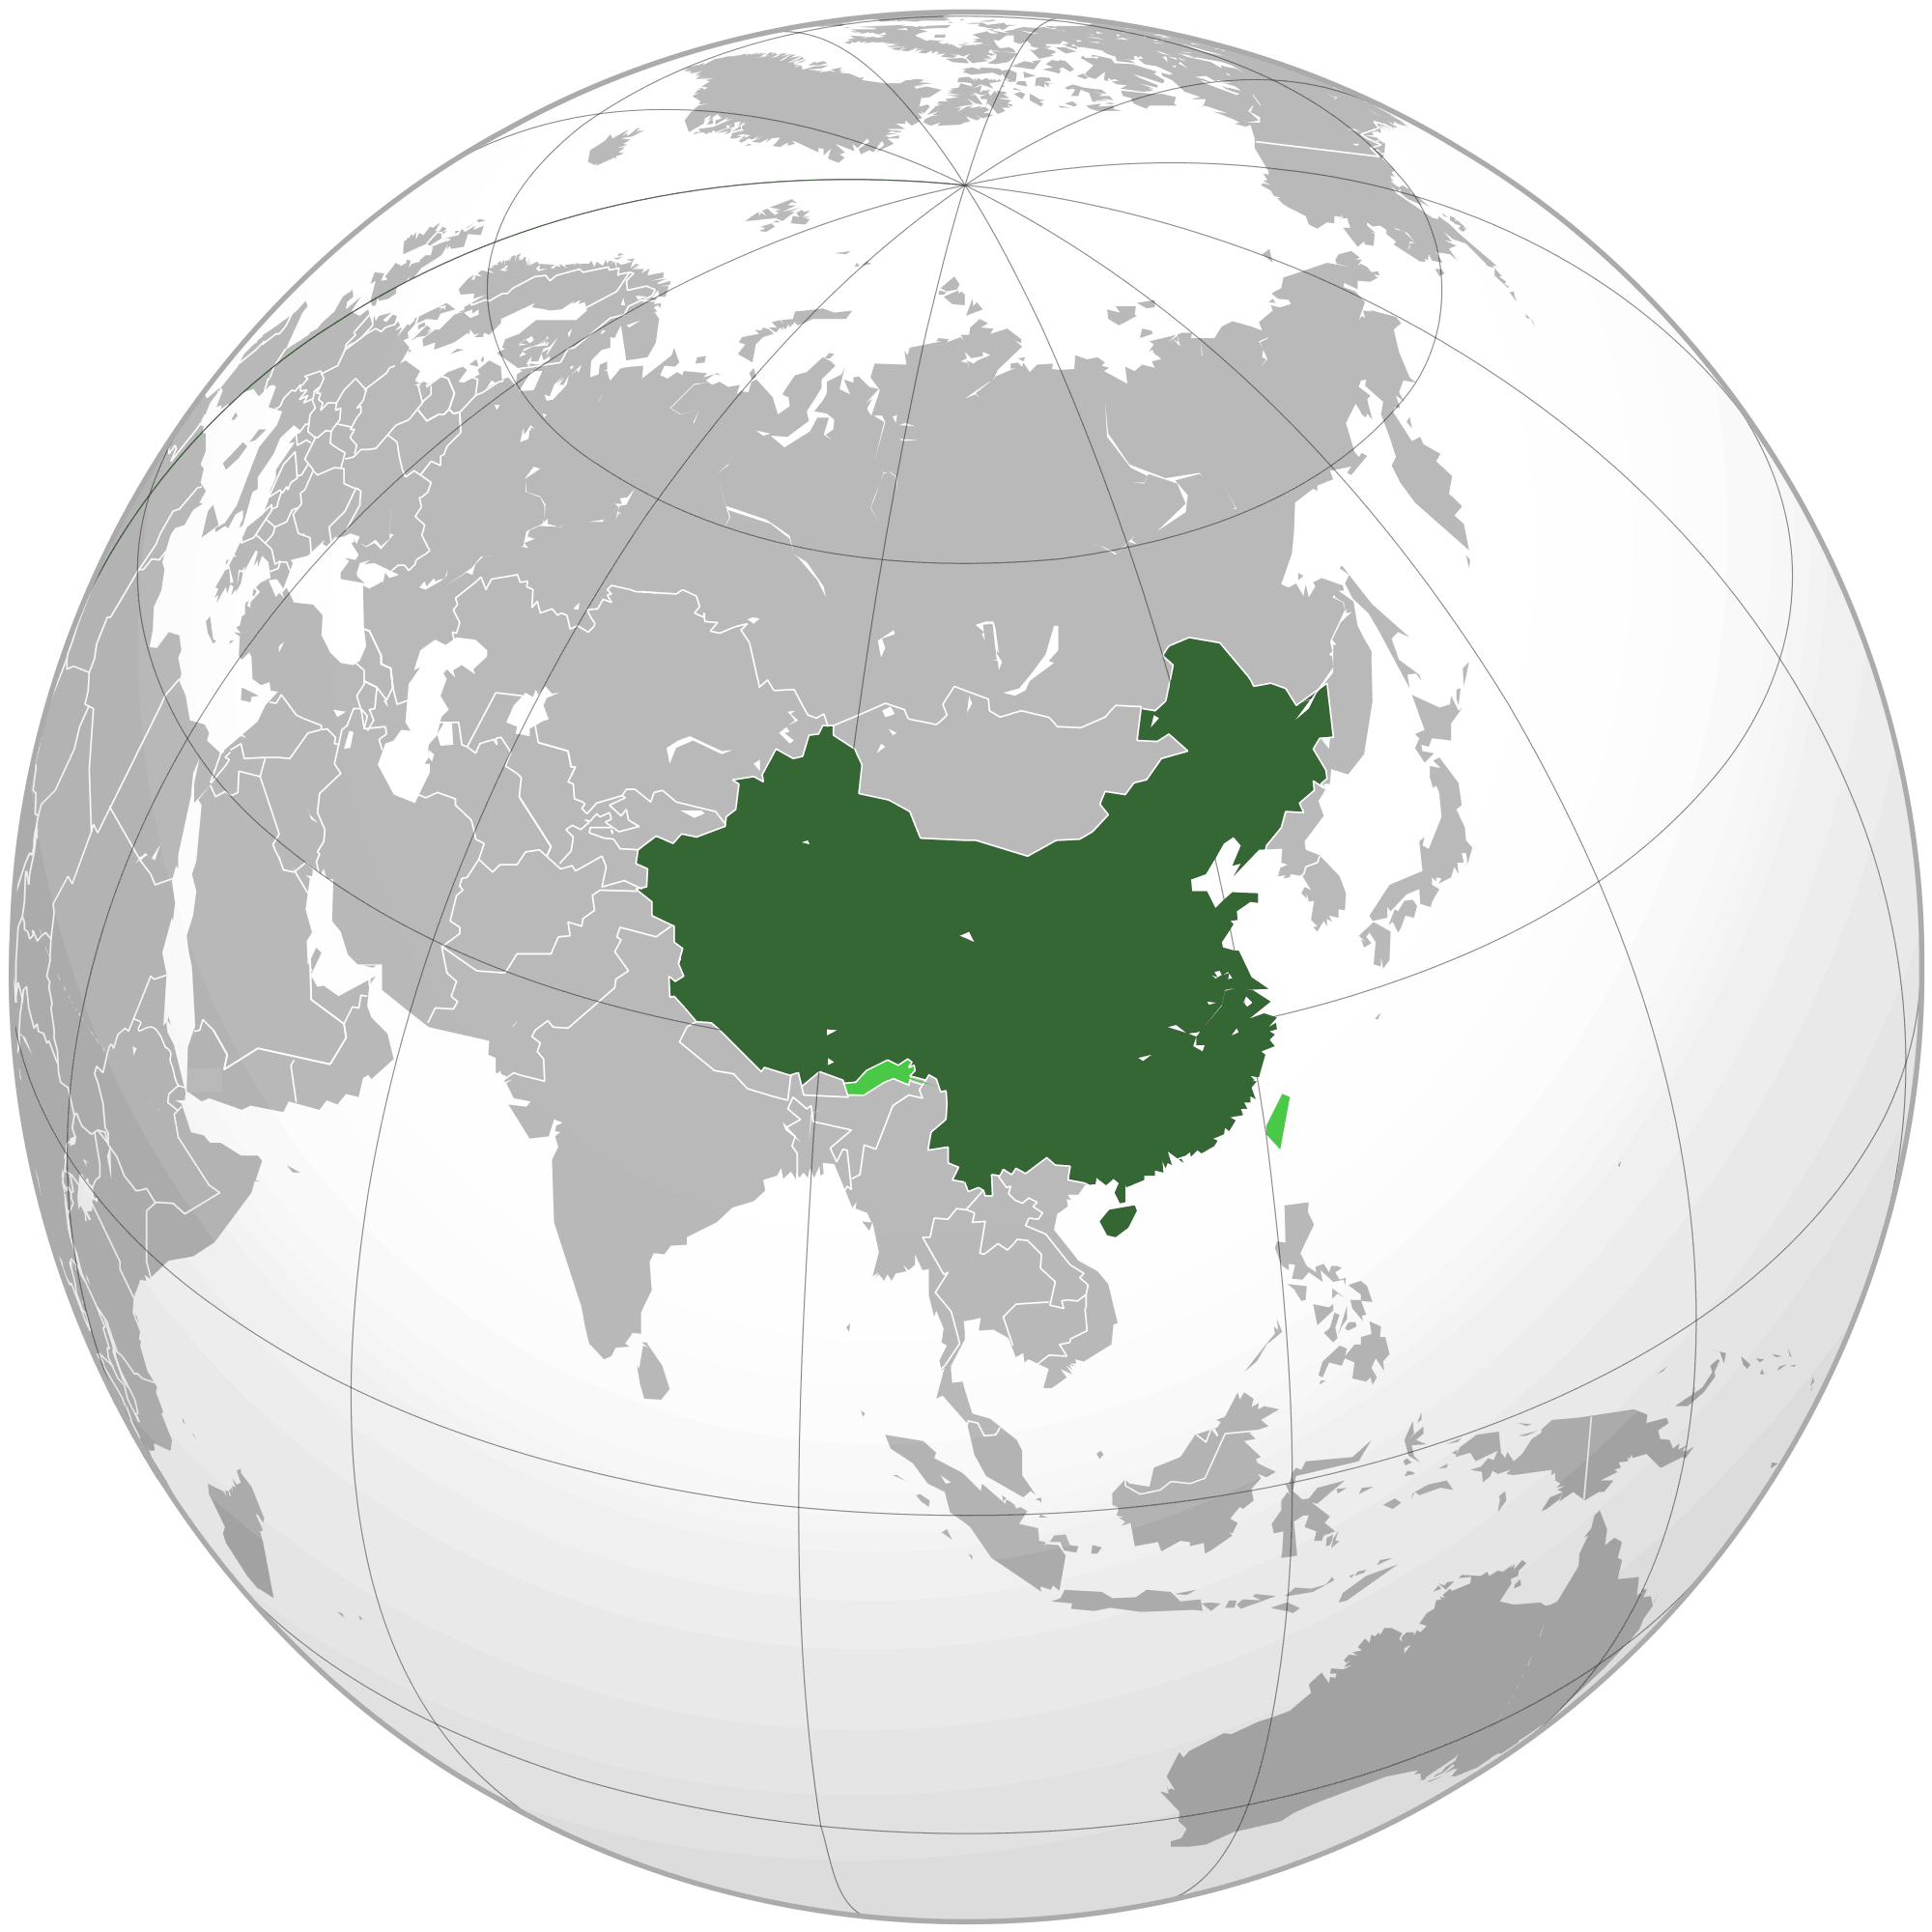 Chinese Programs In Taiwan